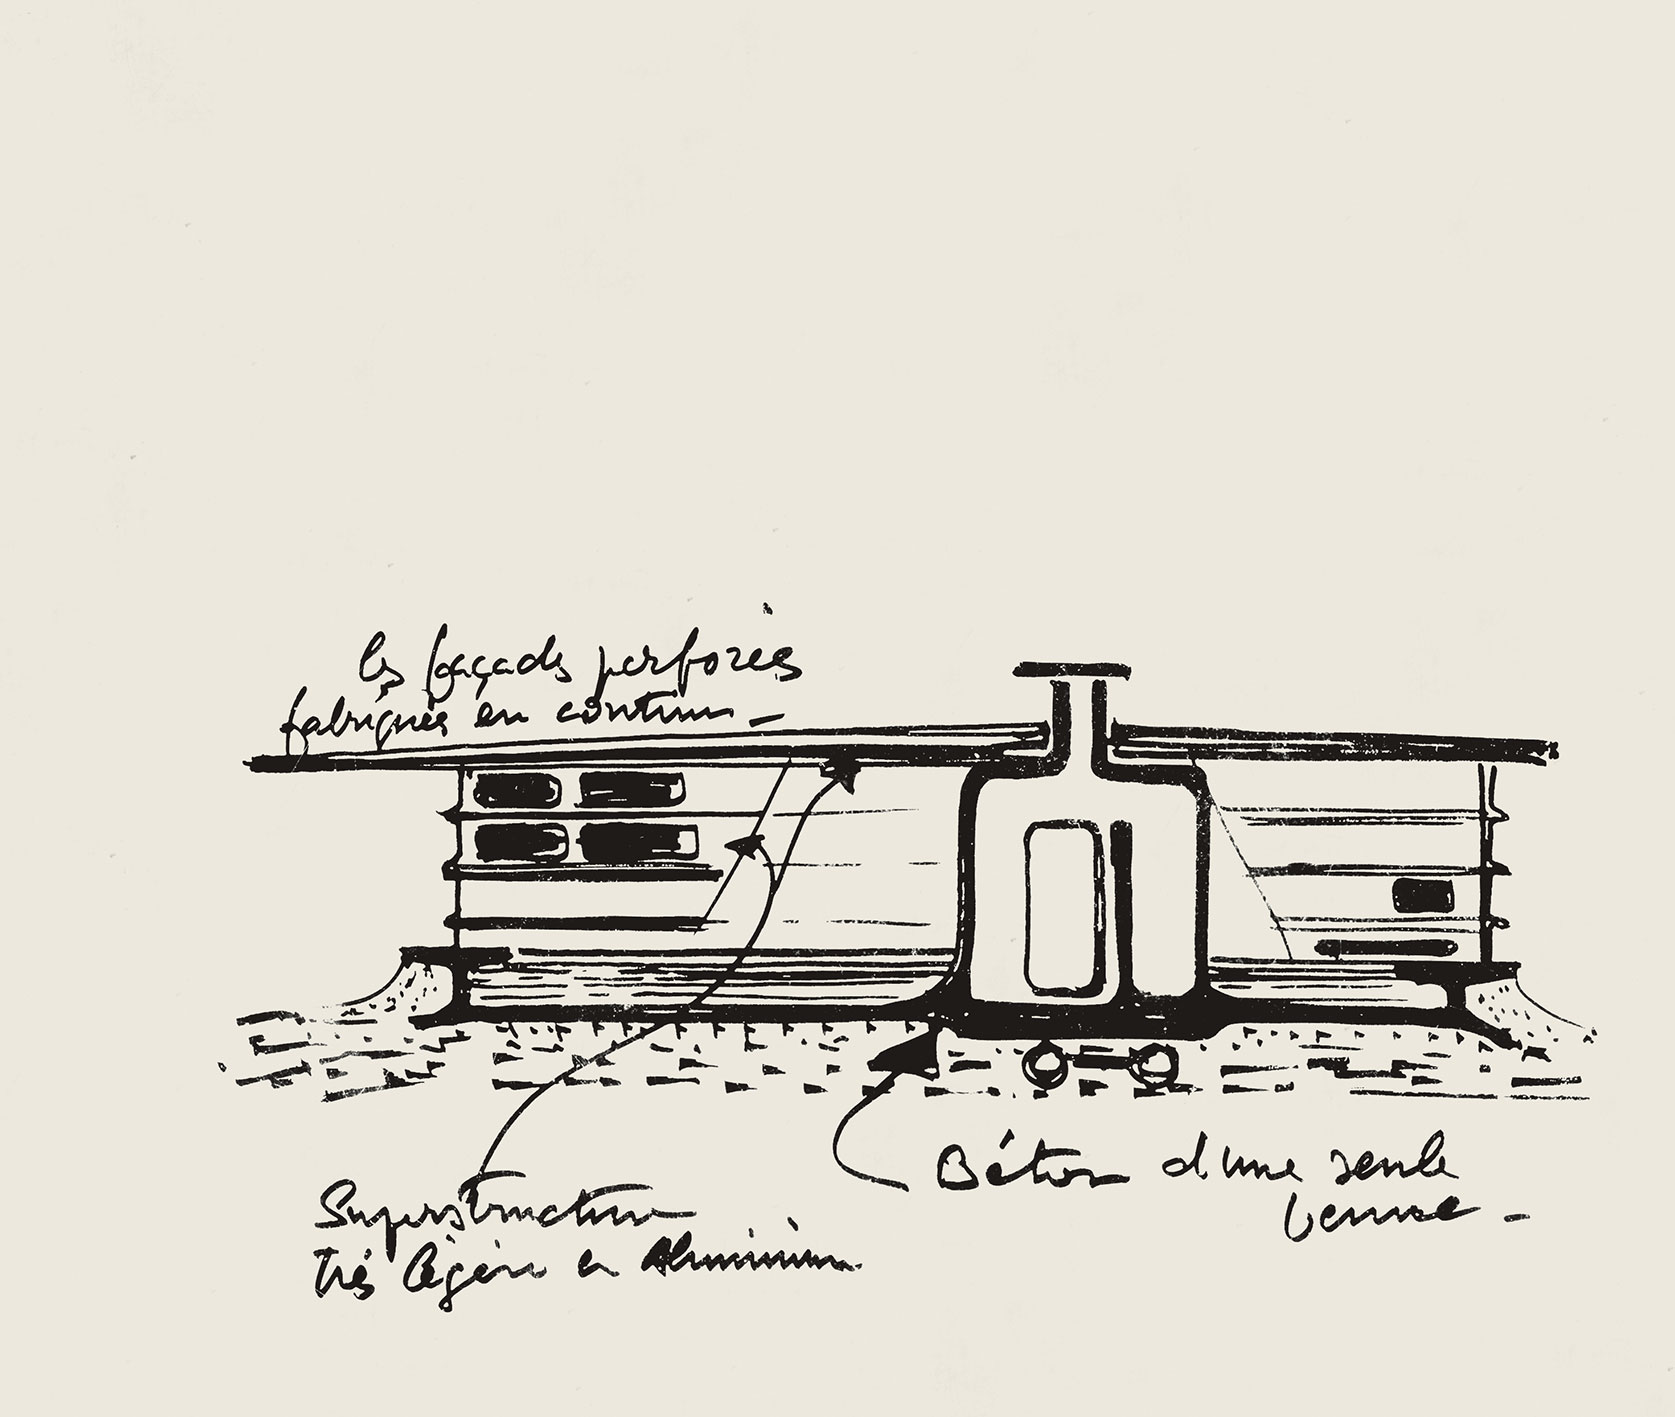 Designs for the Alba House (aluminum, reinforced concrete), 1952–1953 (M. Silvy, architecture intern).